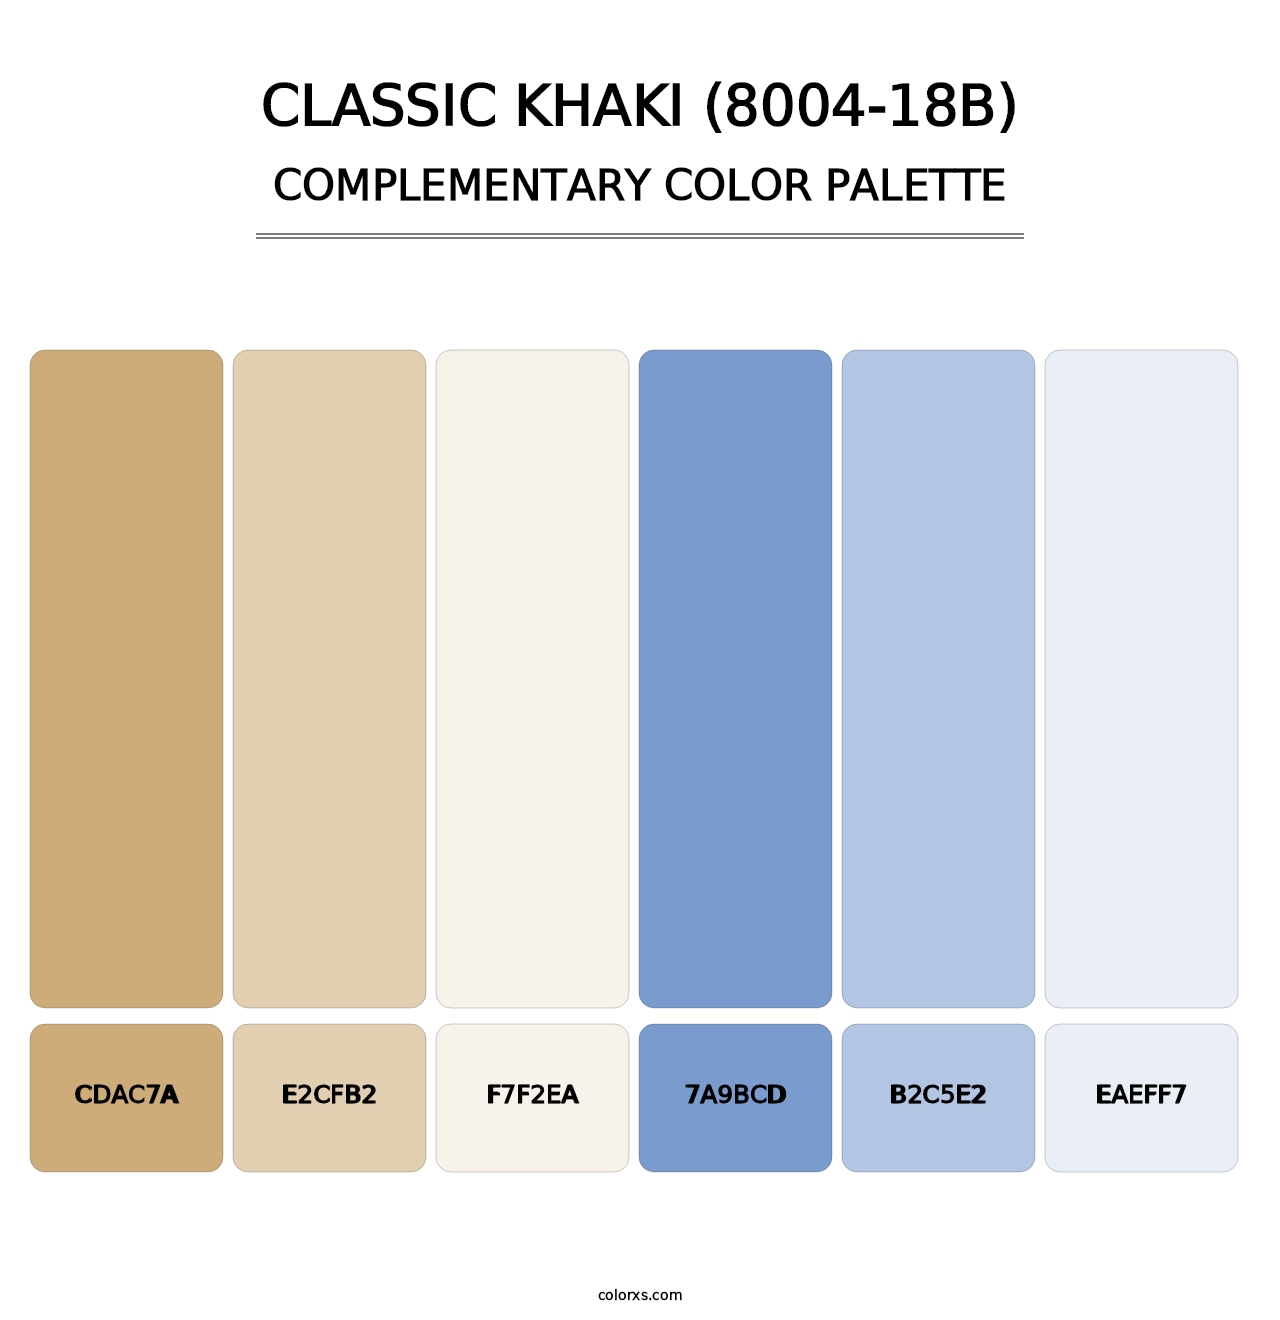 Classic Khaki (8004-18B) - Complementary Color Palette